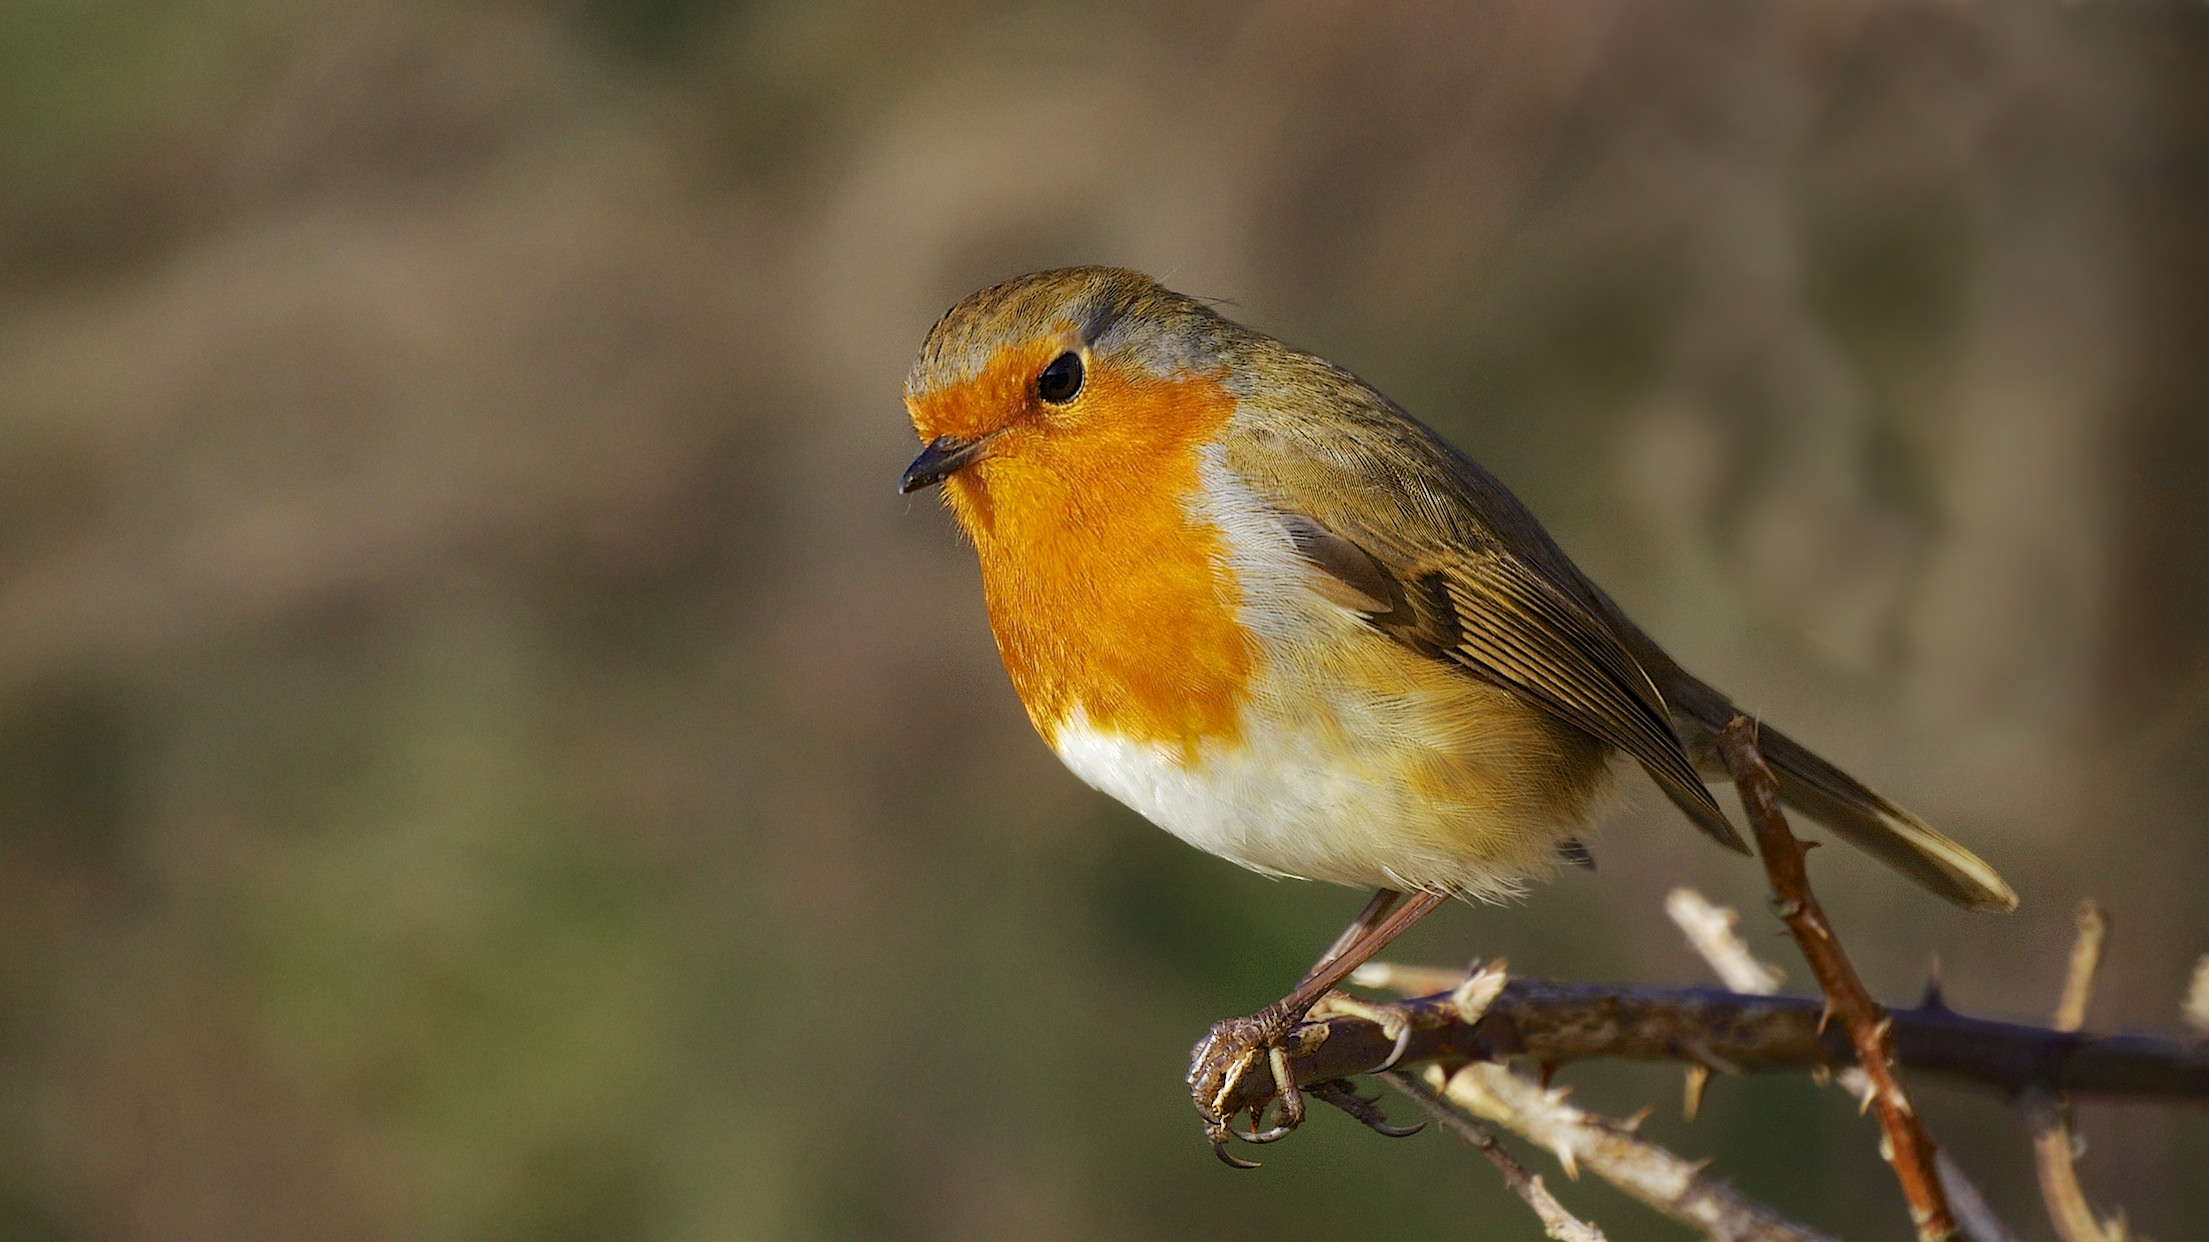 File:A bright little robin! (8420315404).jpg - Wikimedia Commons